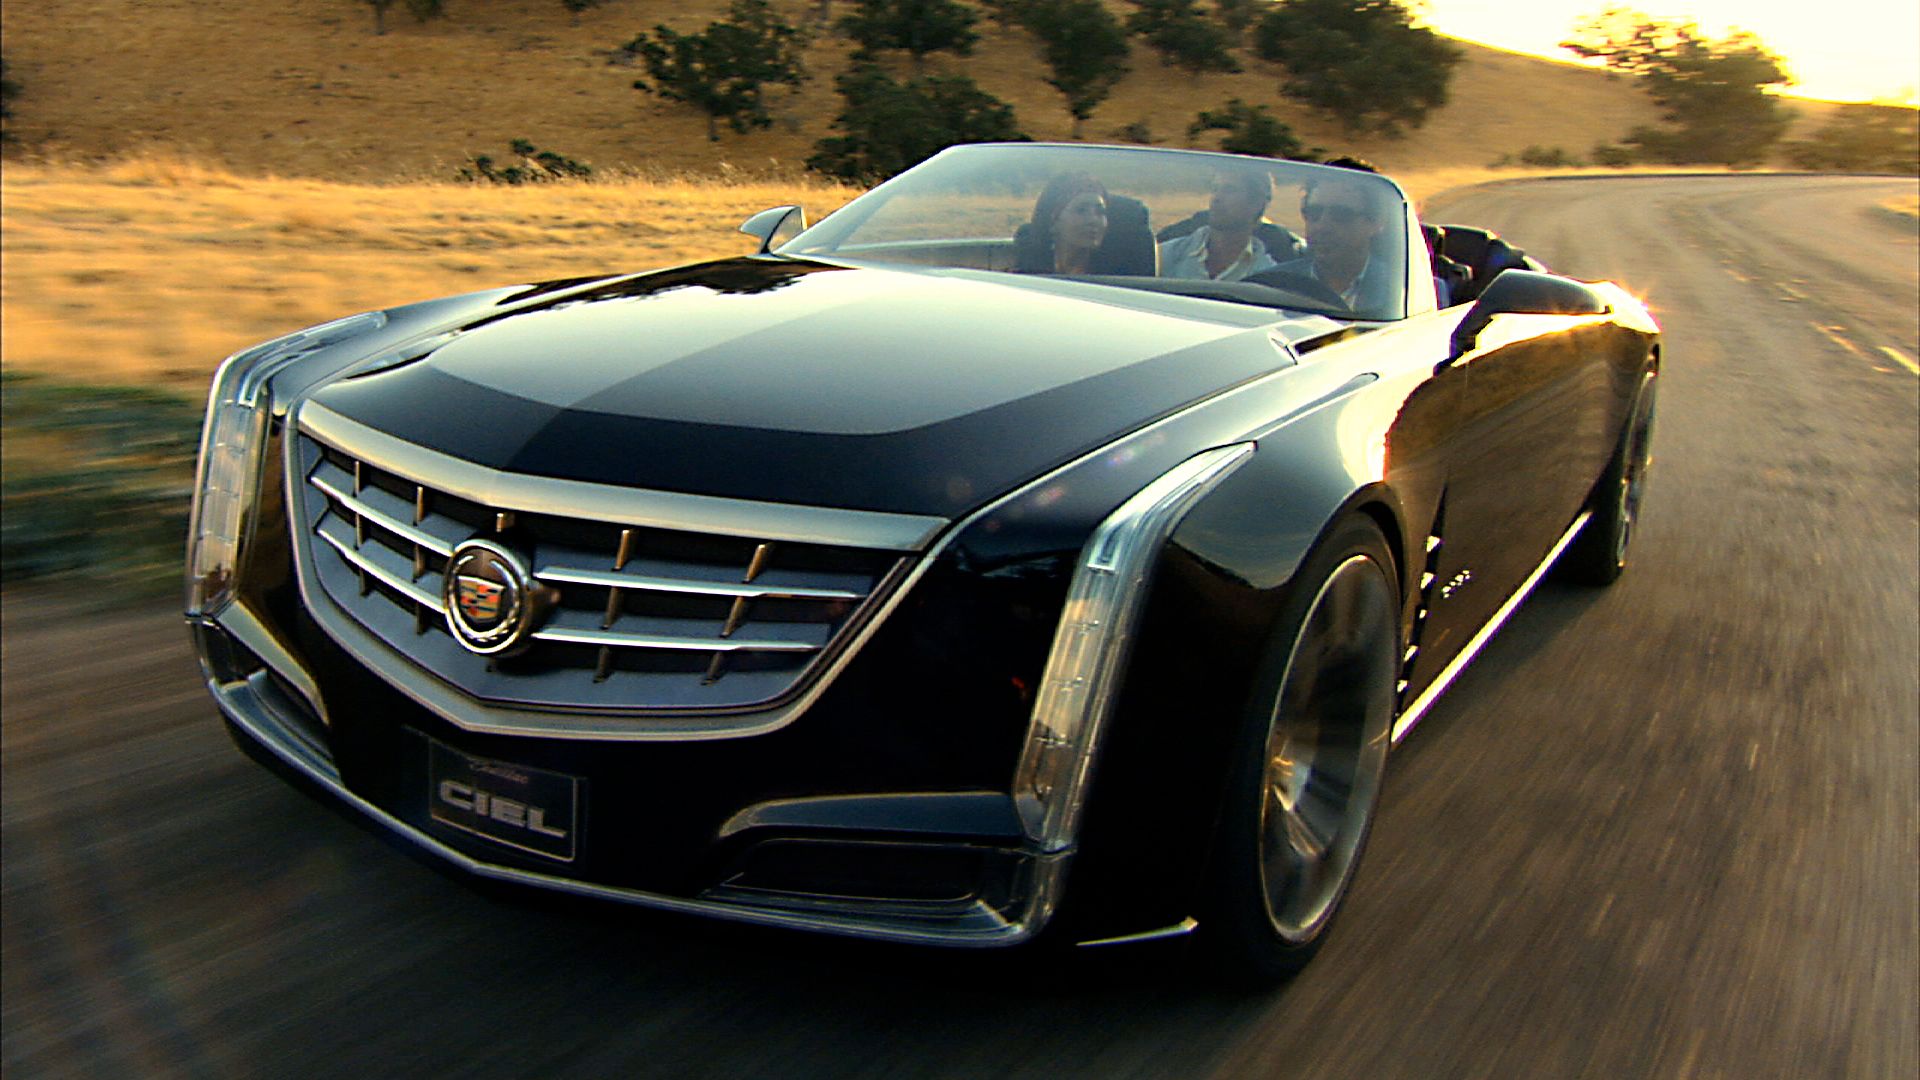 The 2011 Cadillac Ciel Concept Car on the road.